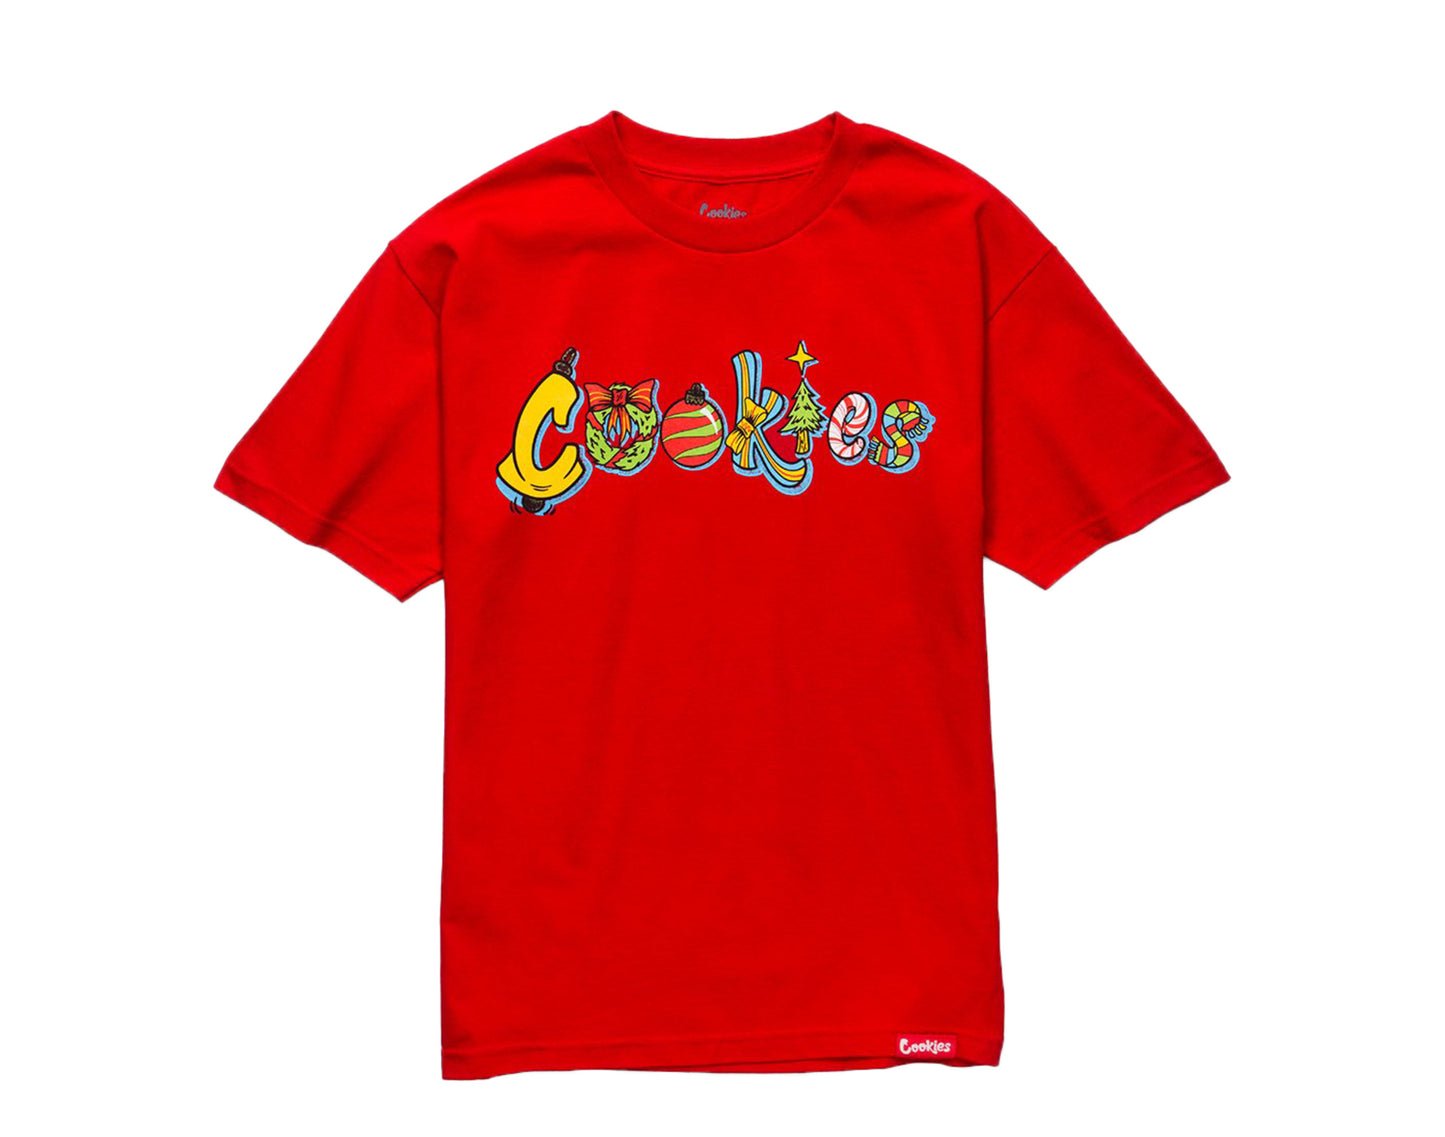 Cookies 'Tis The Season Red Men's Tee Shirt 1546T4359-RED